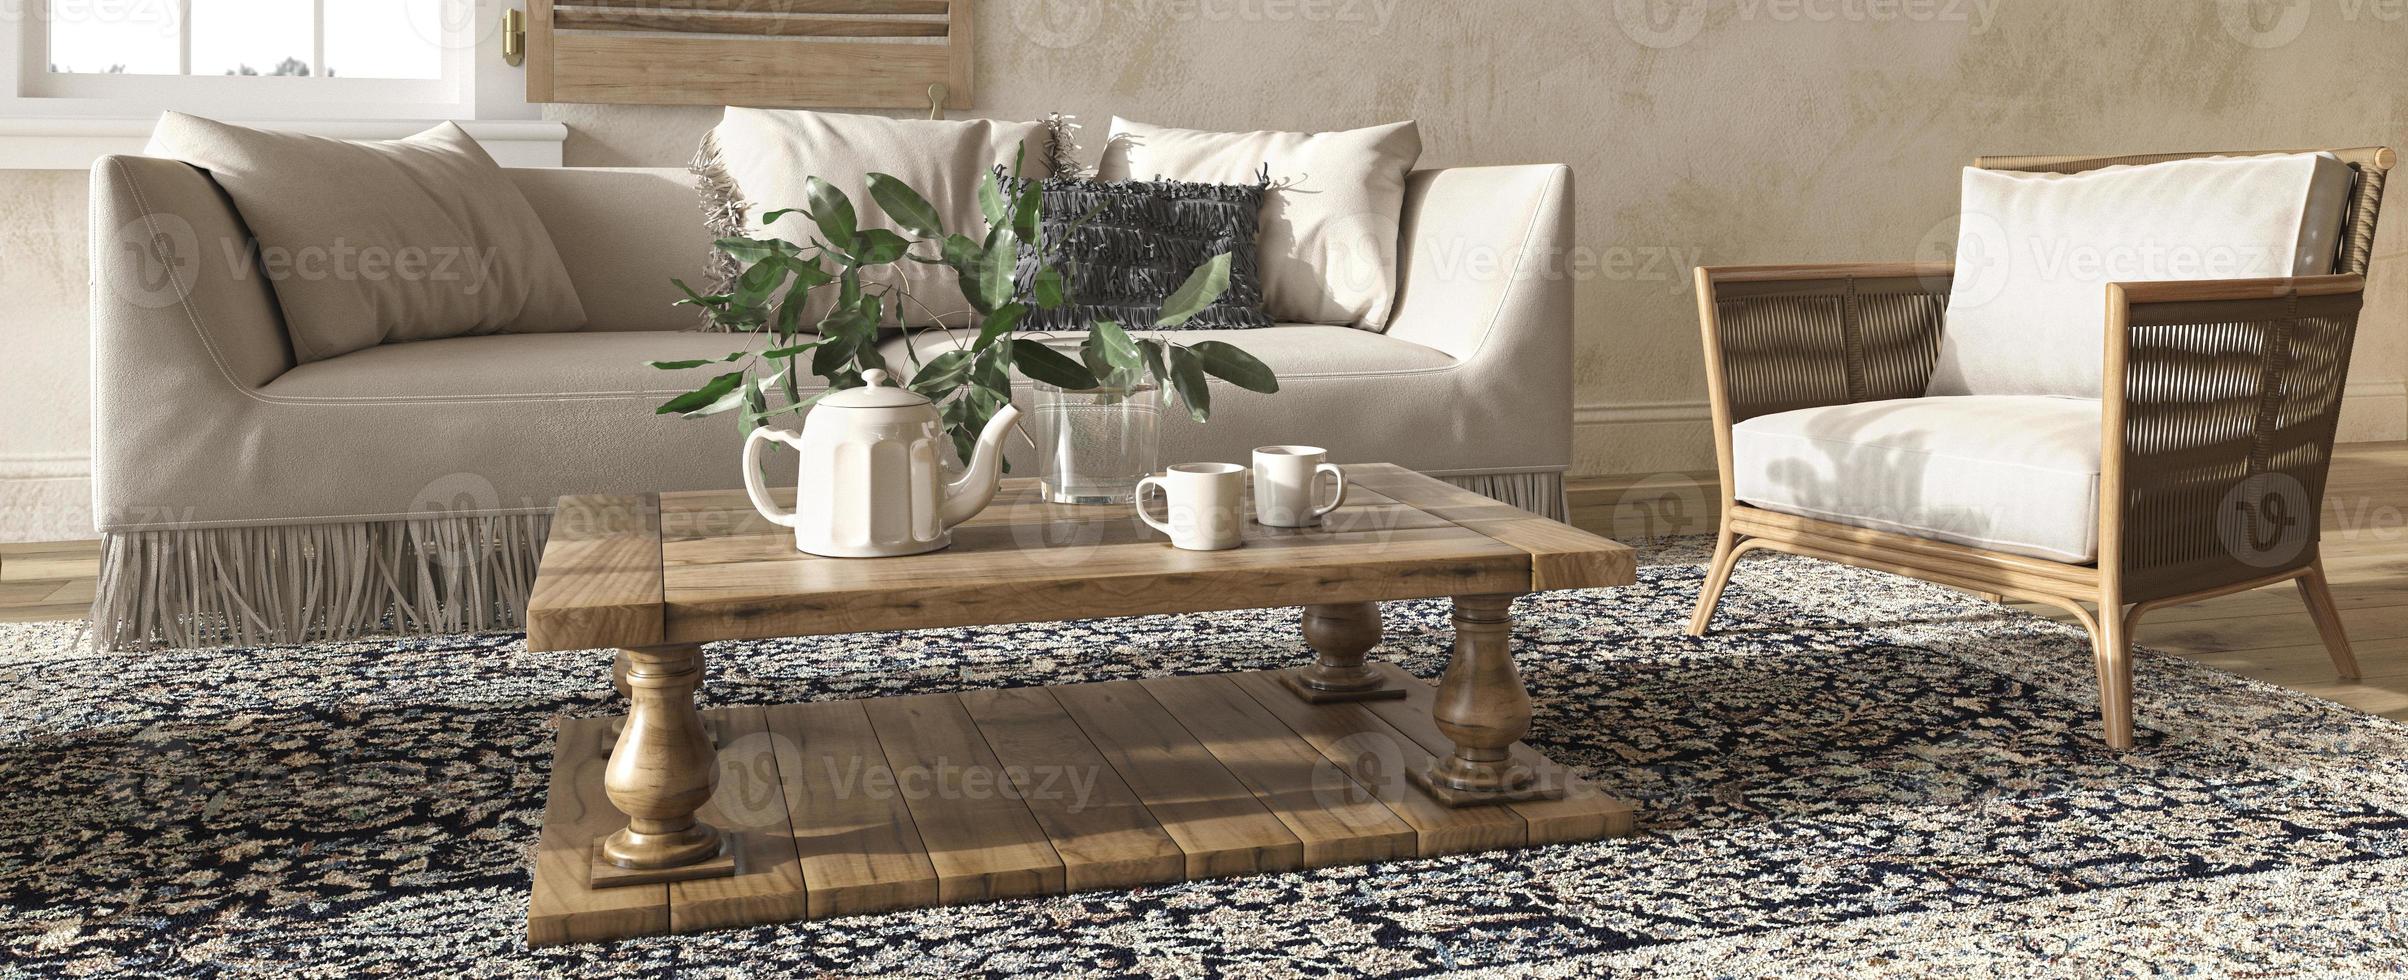 Scandinavian farmhouse style beige living room interior. Web banner background. 3d render illustration. photo